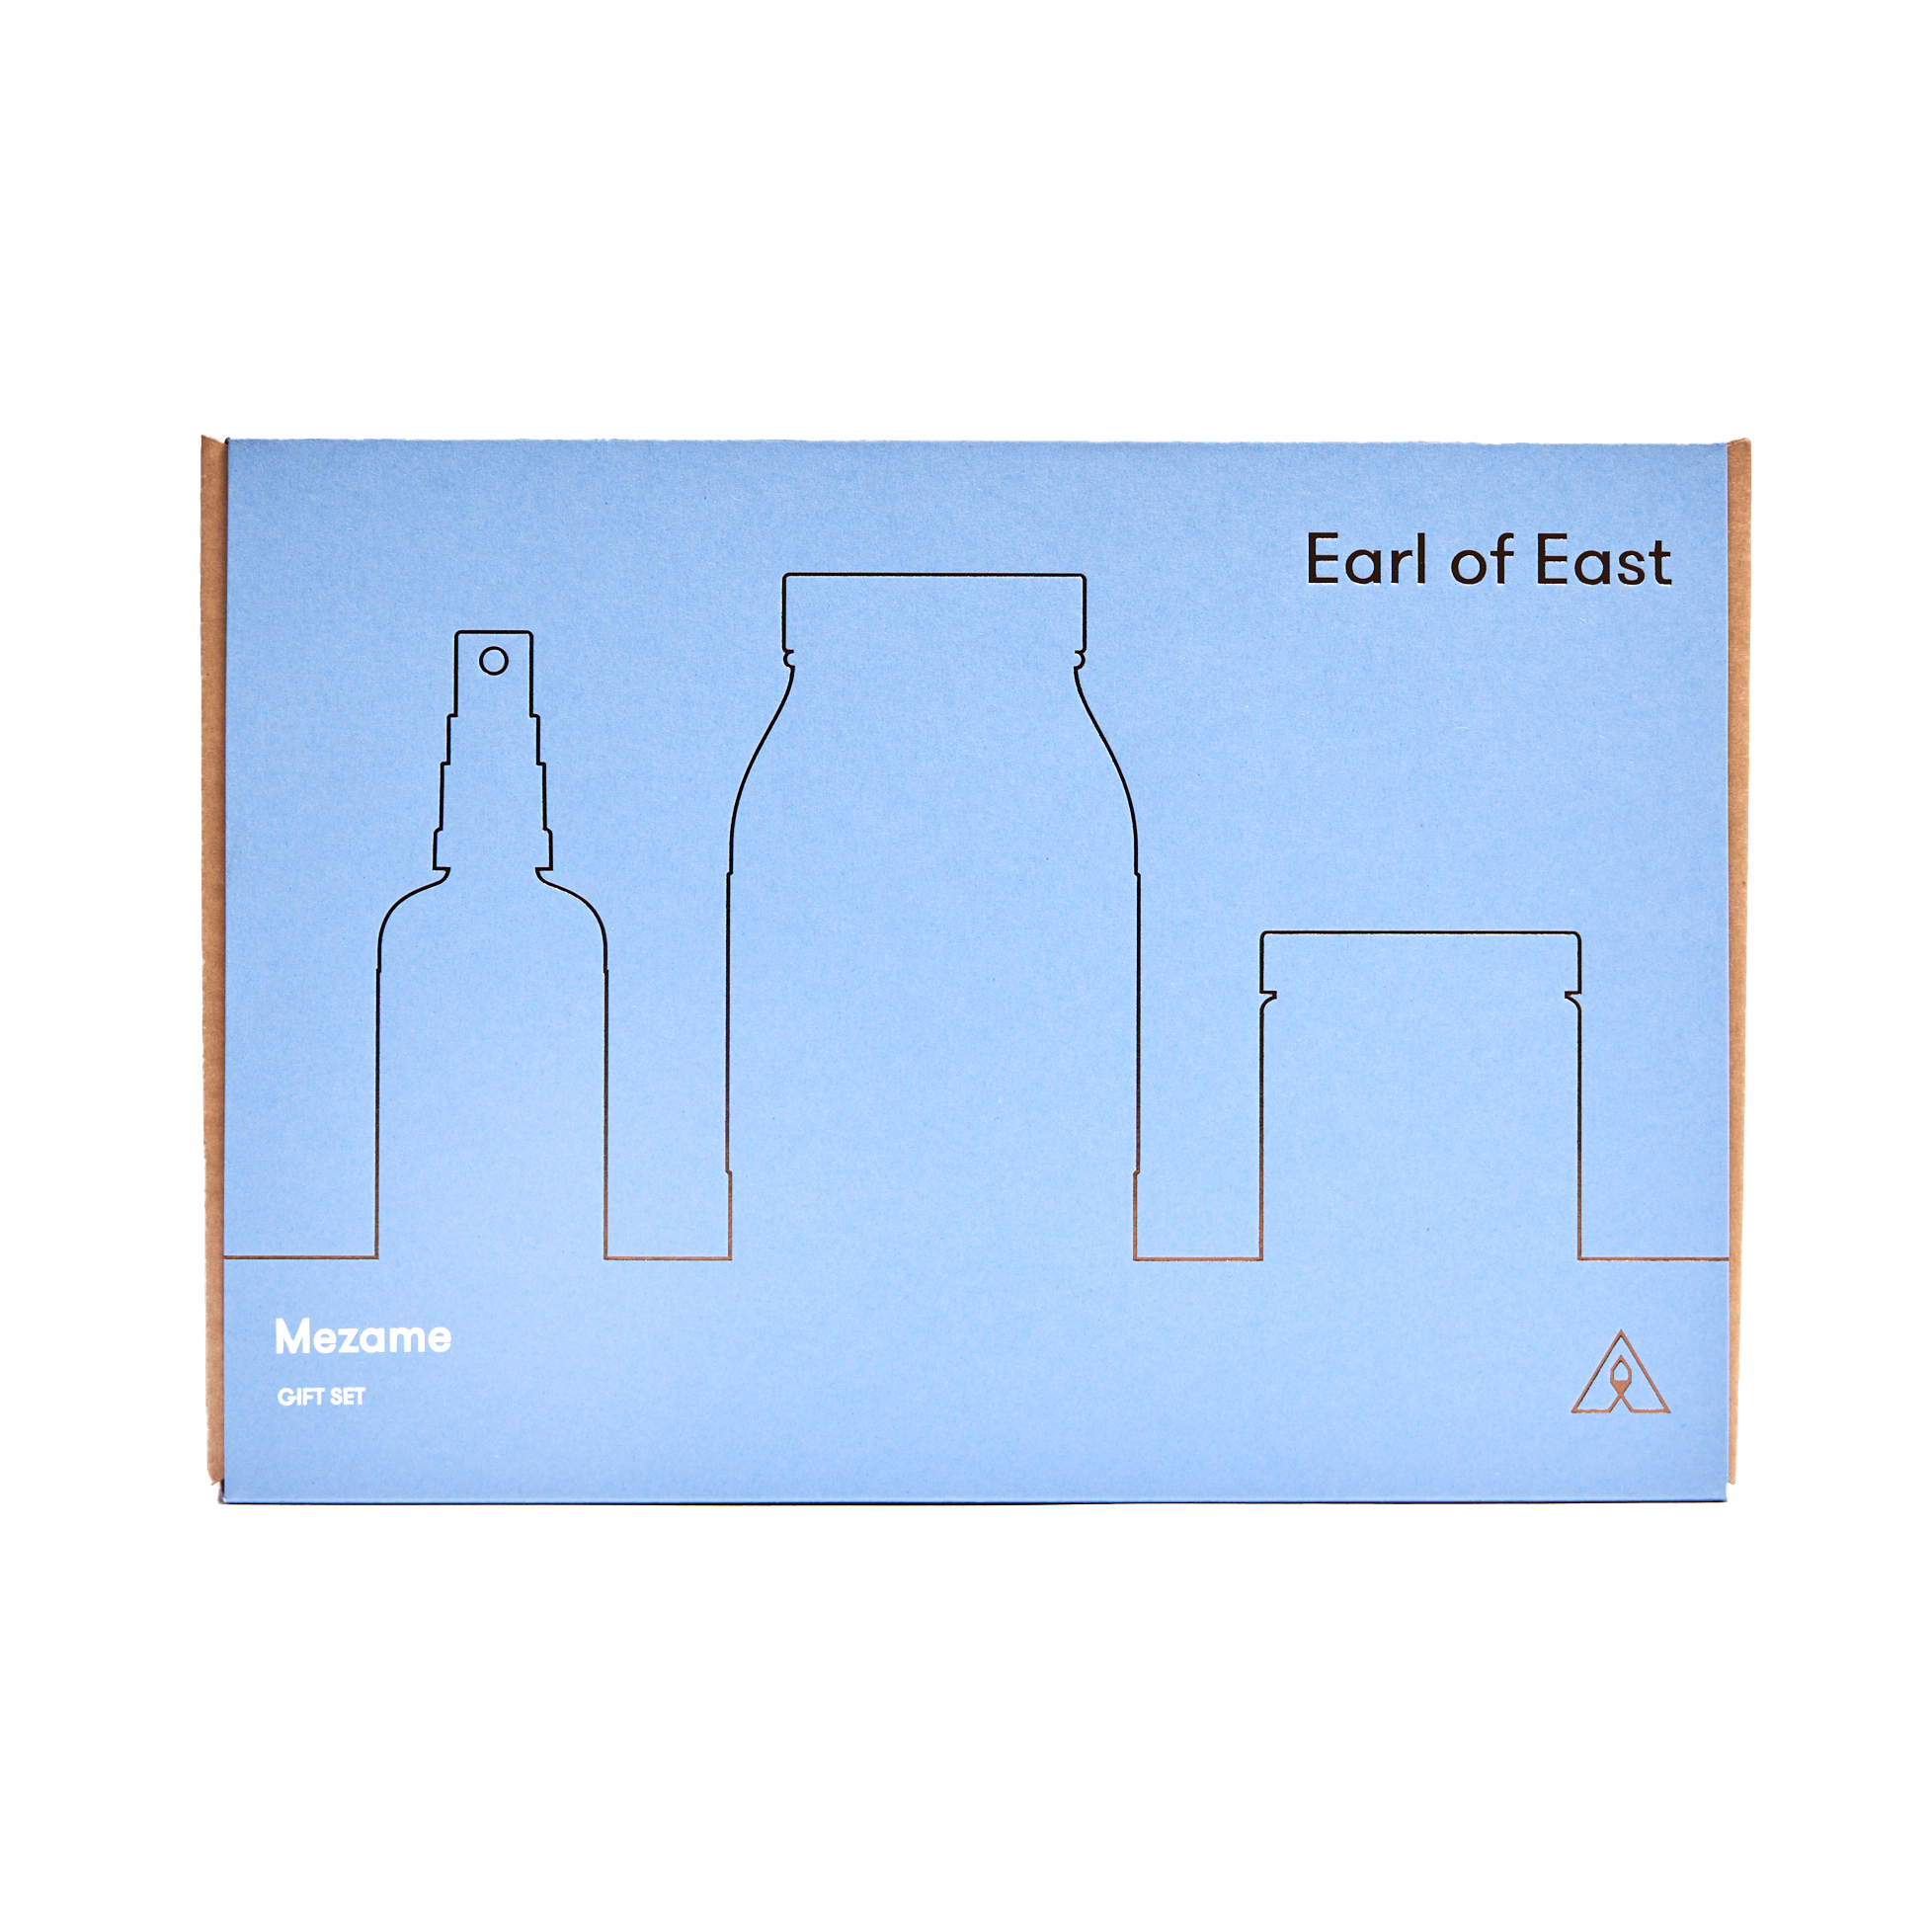 Awakening Gift Set - Mezame | Candle, Shower Spray, Bath Salts | by Earl of East - Lifestory - Earl of East